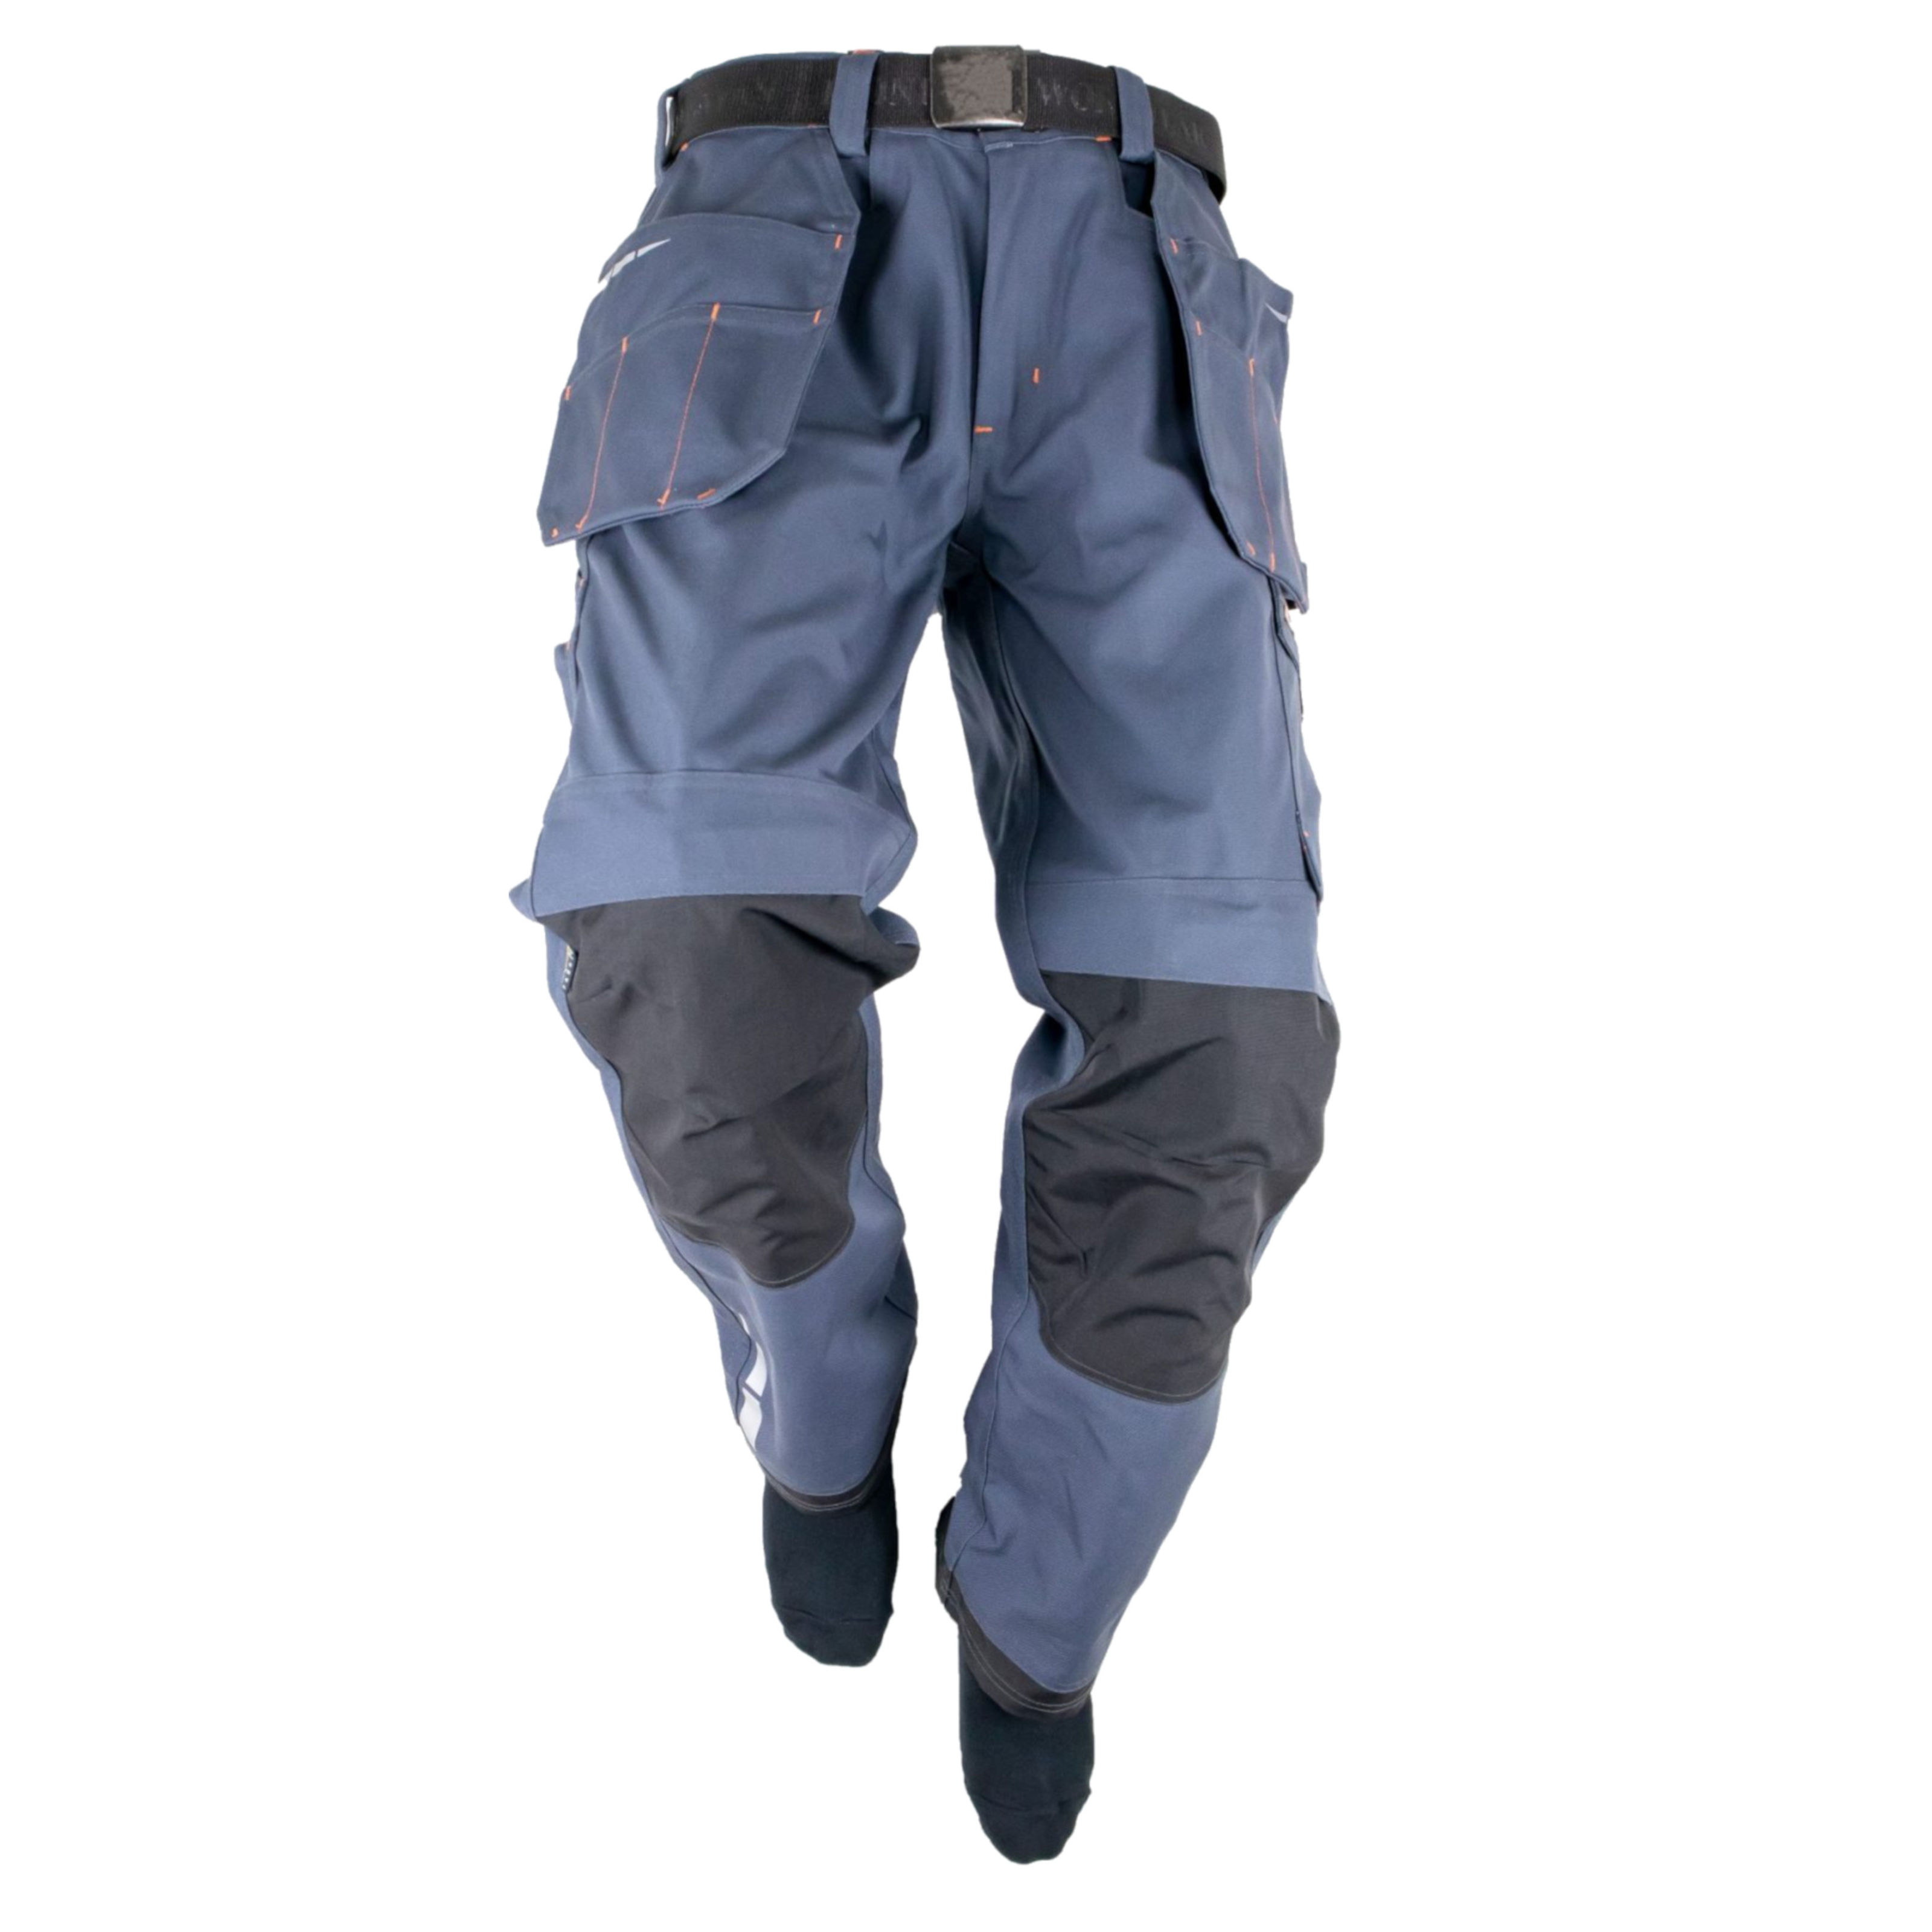 Mens Navy Multi Pocket Work Trousers